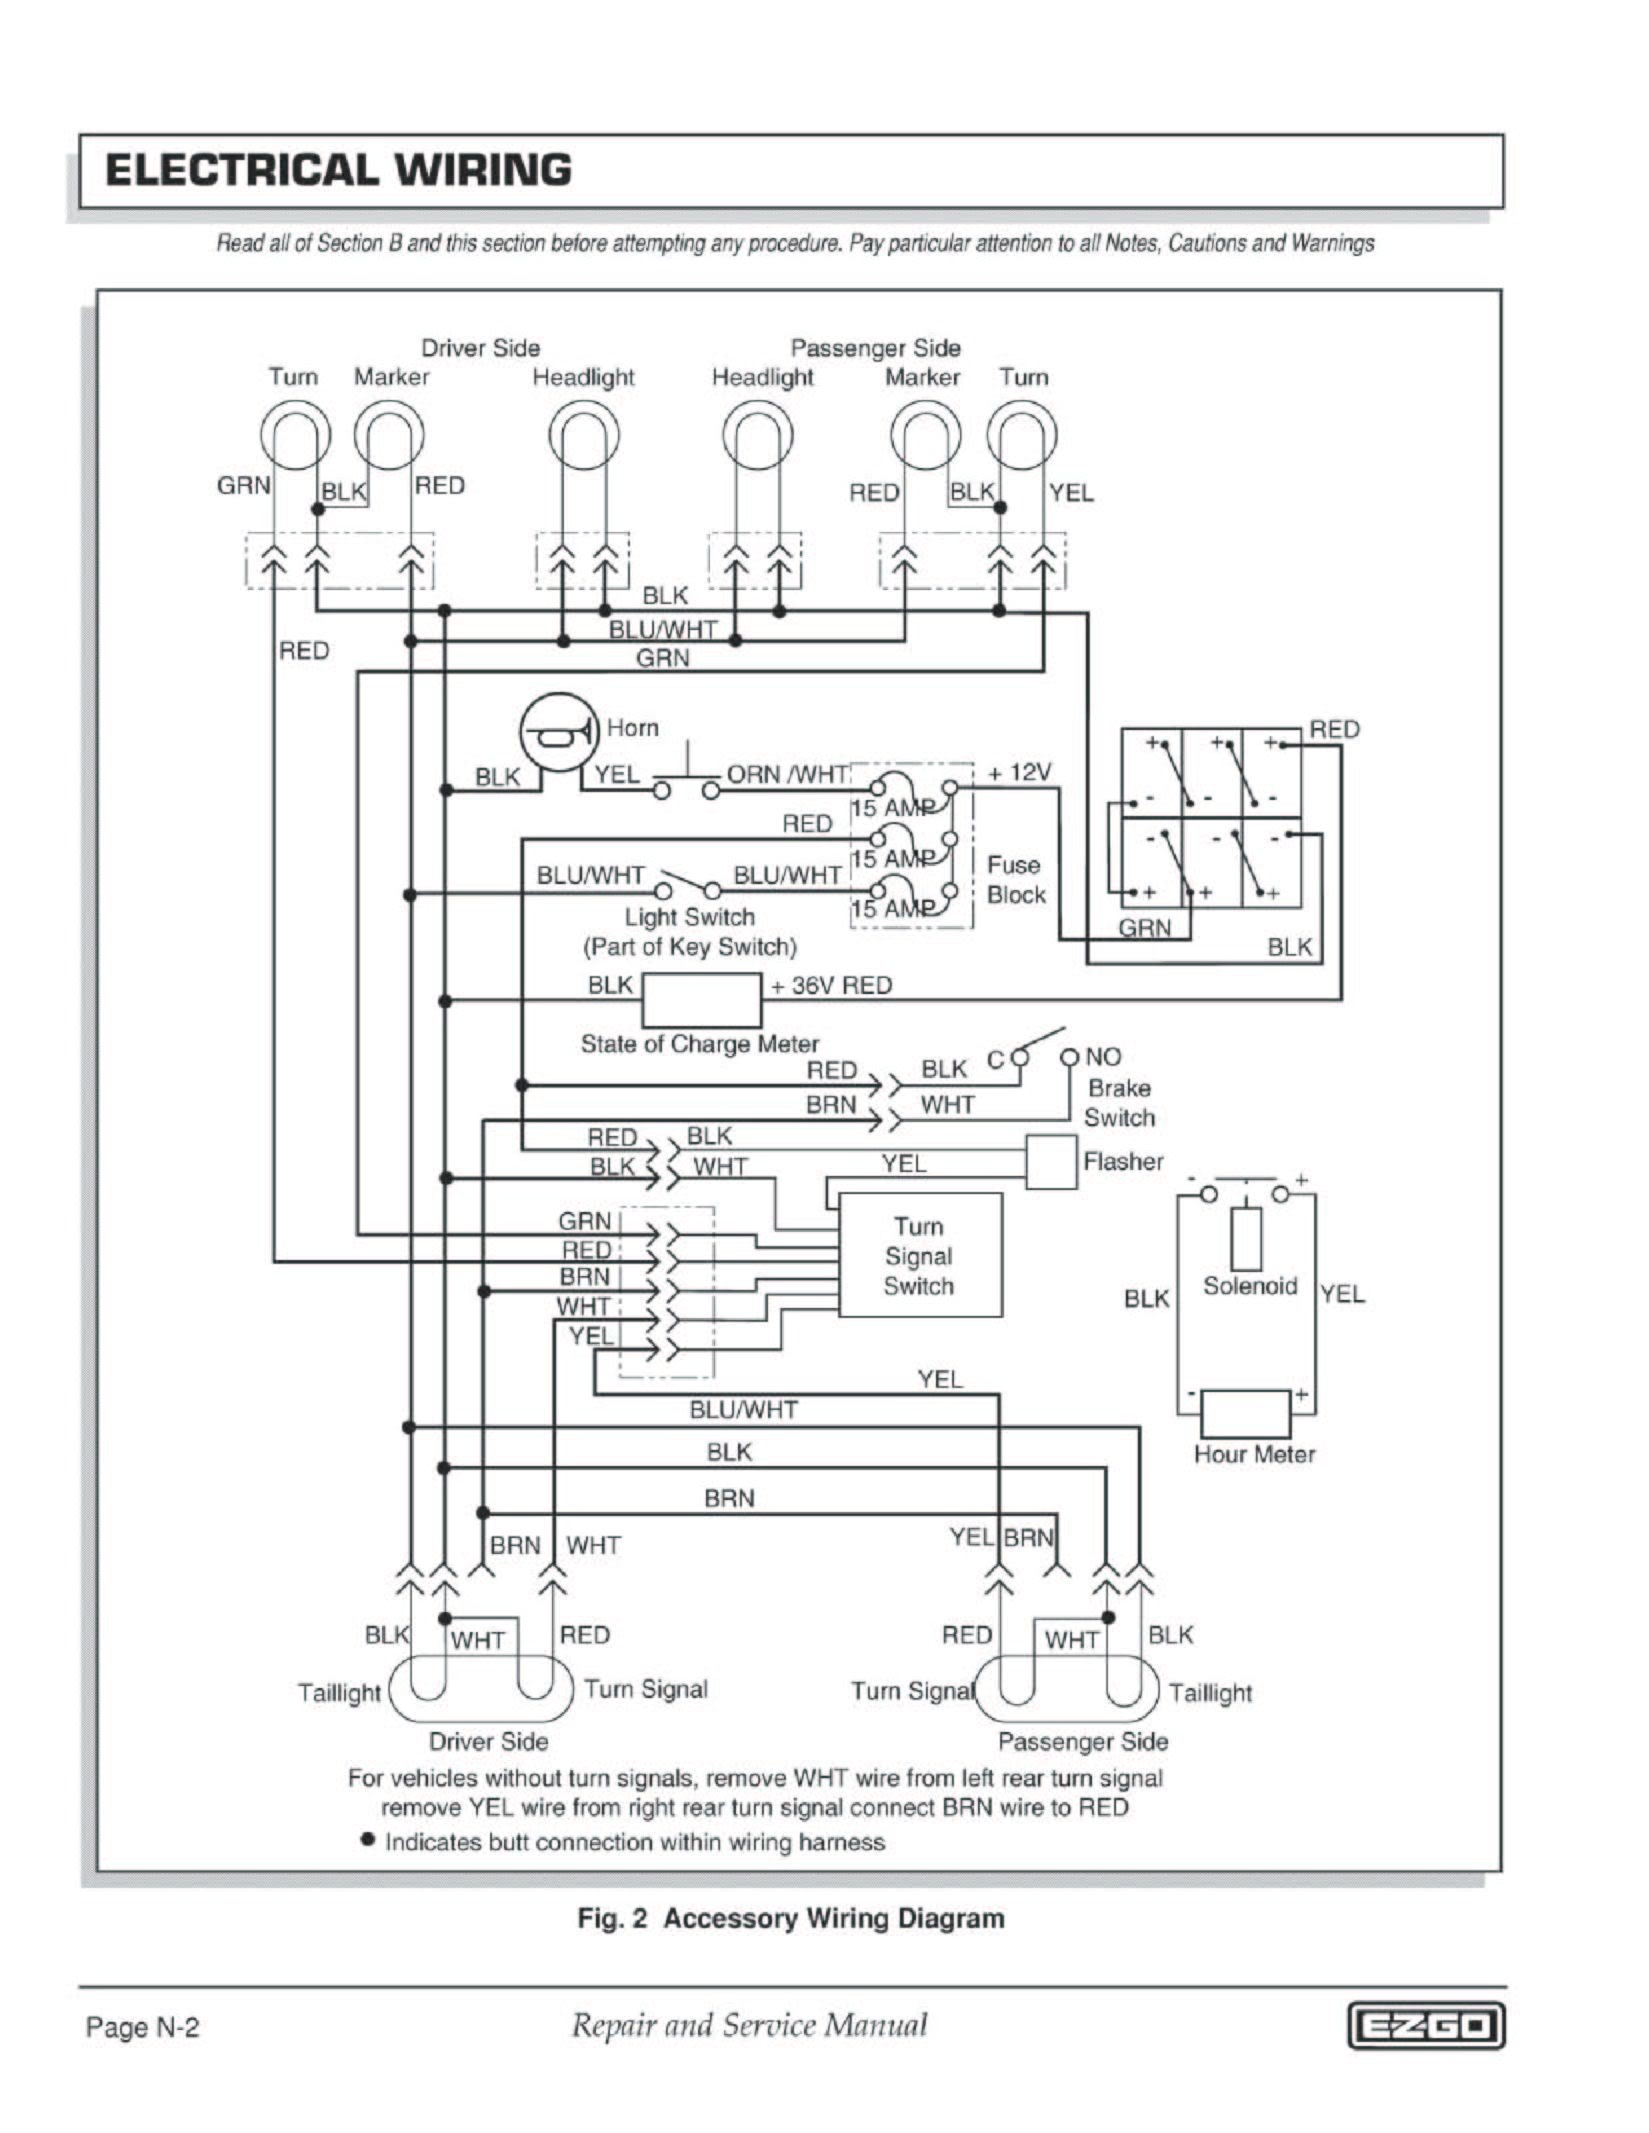 2010 ezgo wiring diagram wiring diagram note ez go rxv 48 volt battery wiring diagram 48 volt ez go wiring diagram